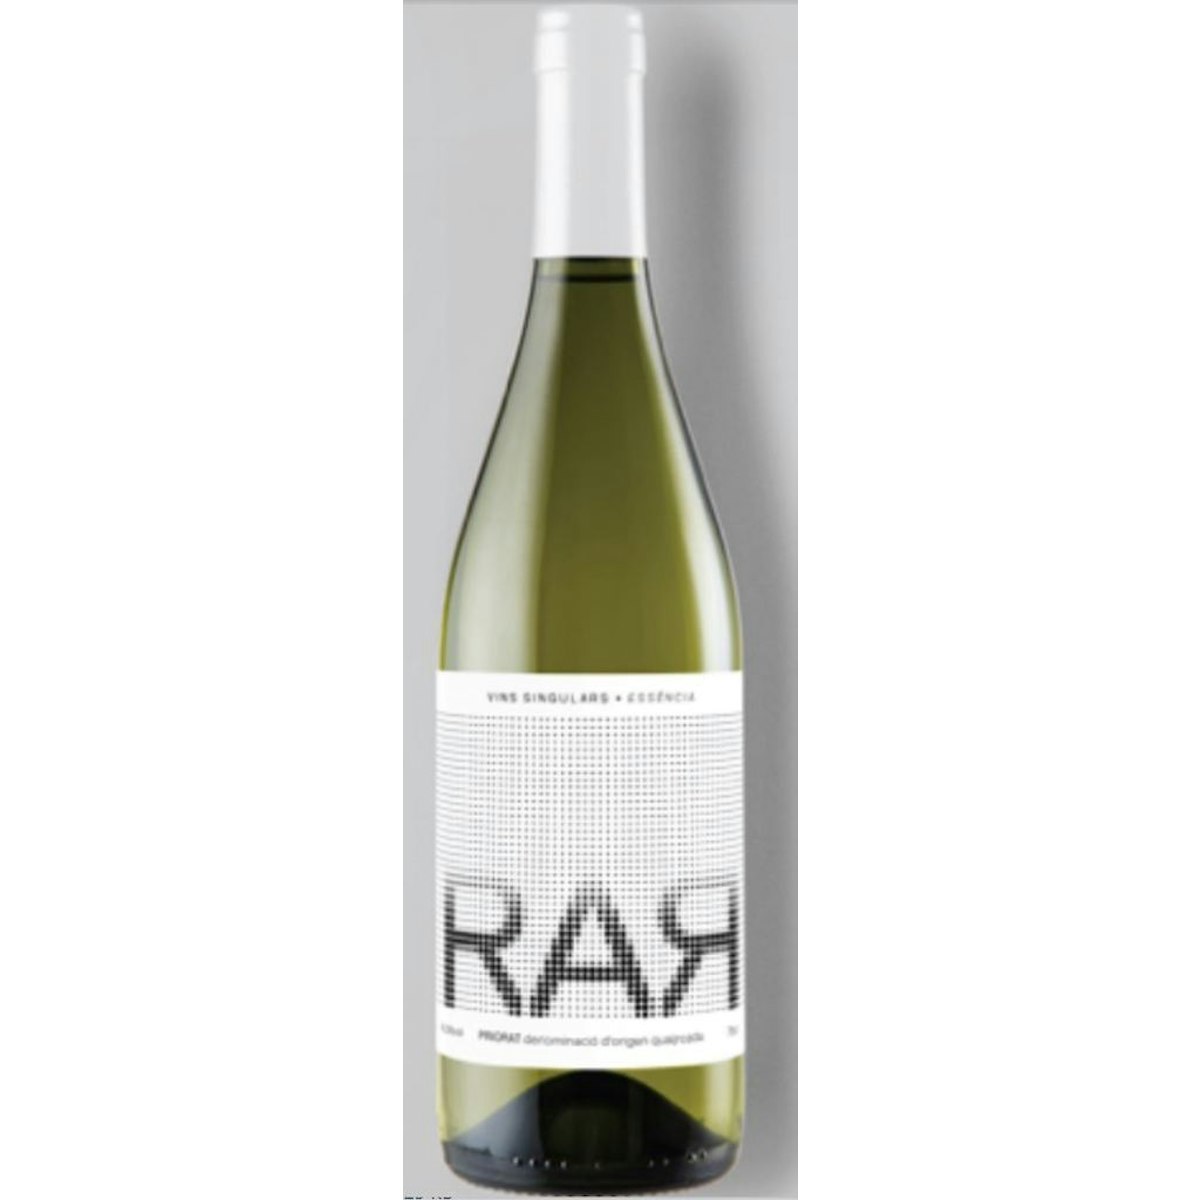 RAR Vins Singulars  Priorat Blanc, Ruby Vintage, 2021